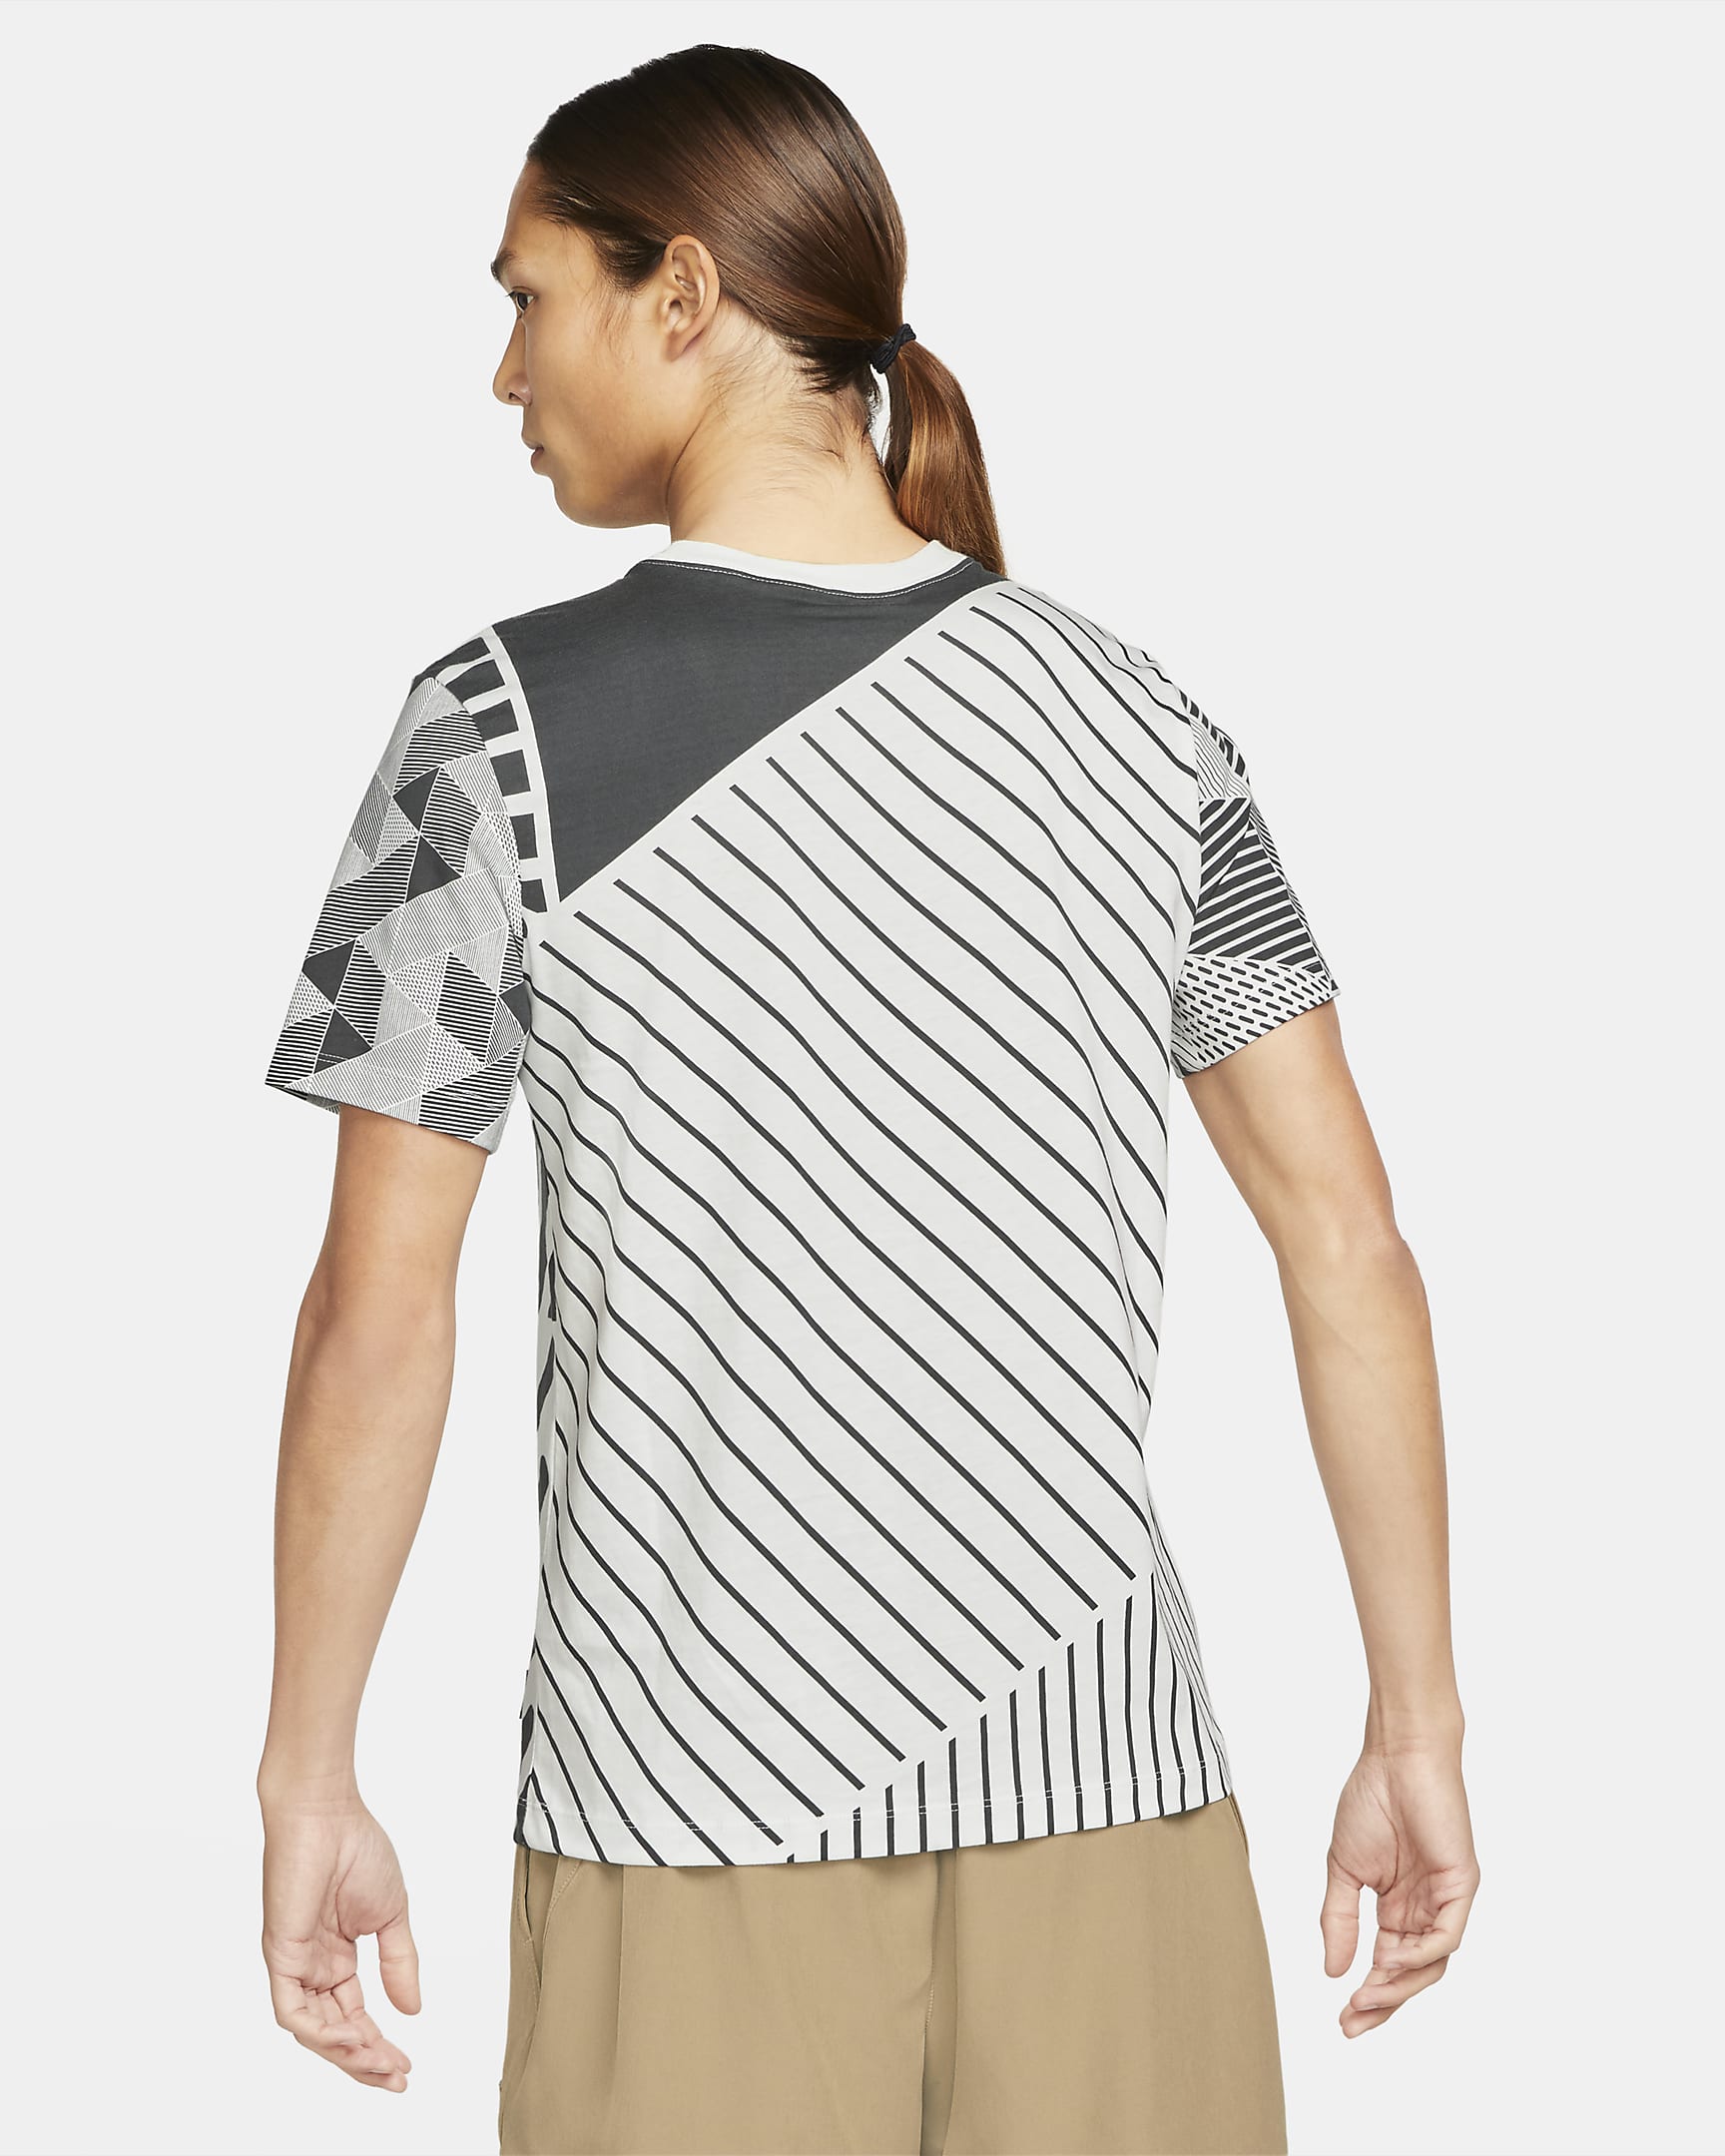 Serena Williams Design Crew Graphic Tennis T-Shirt. Nike IN